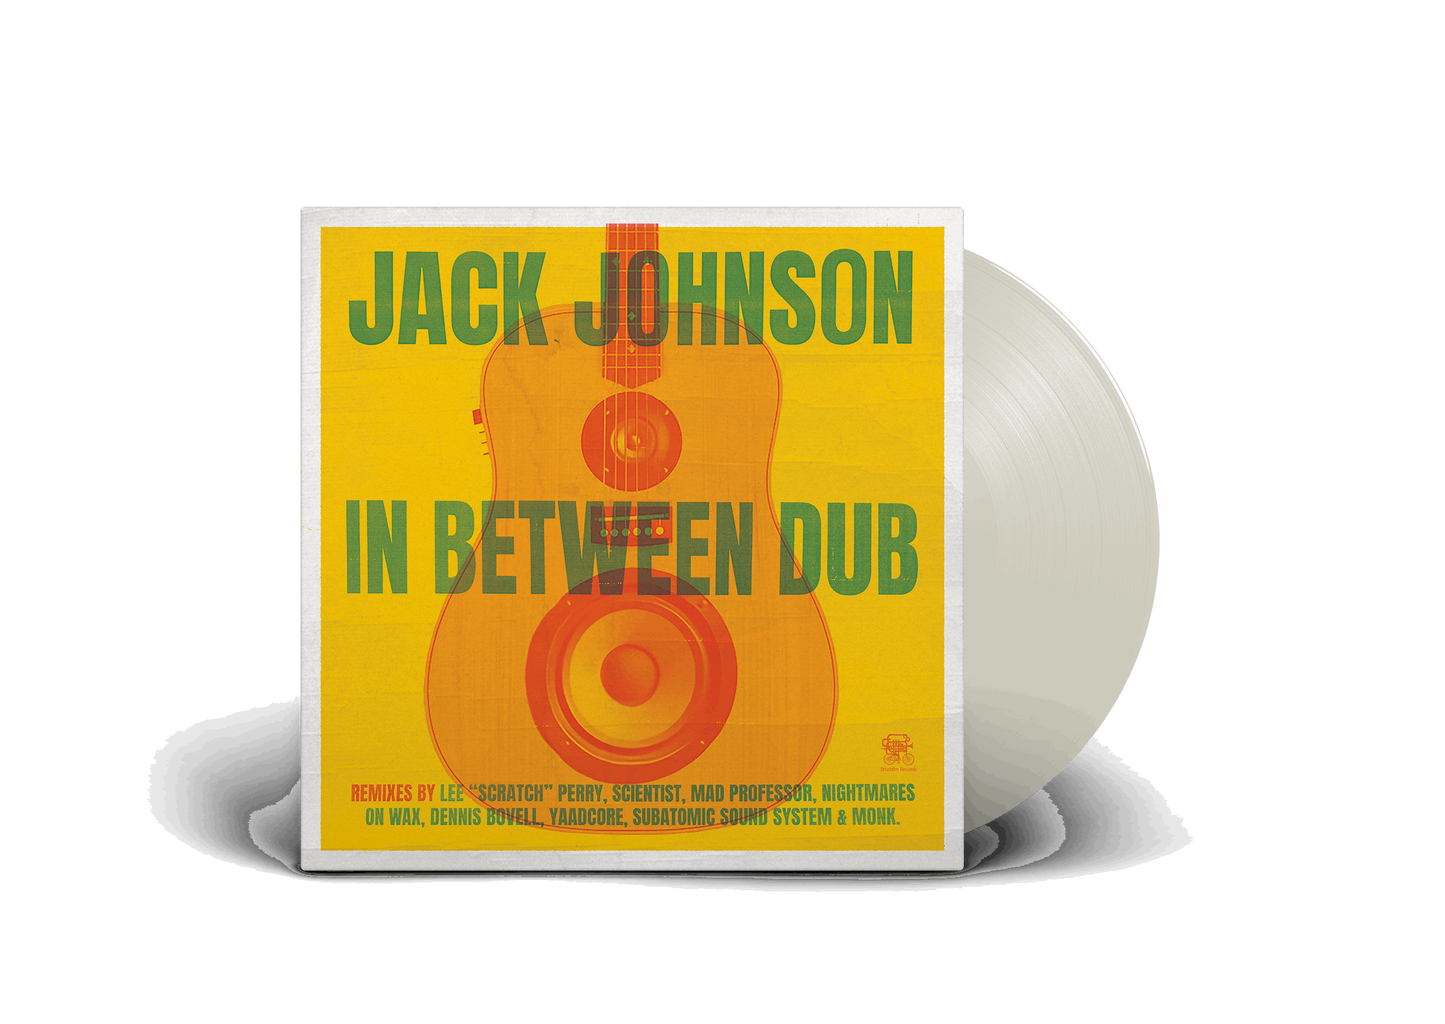 Jack Johnson - In Between Dub - The Vault Collective ltd